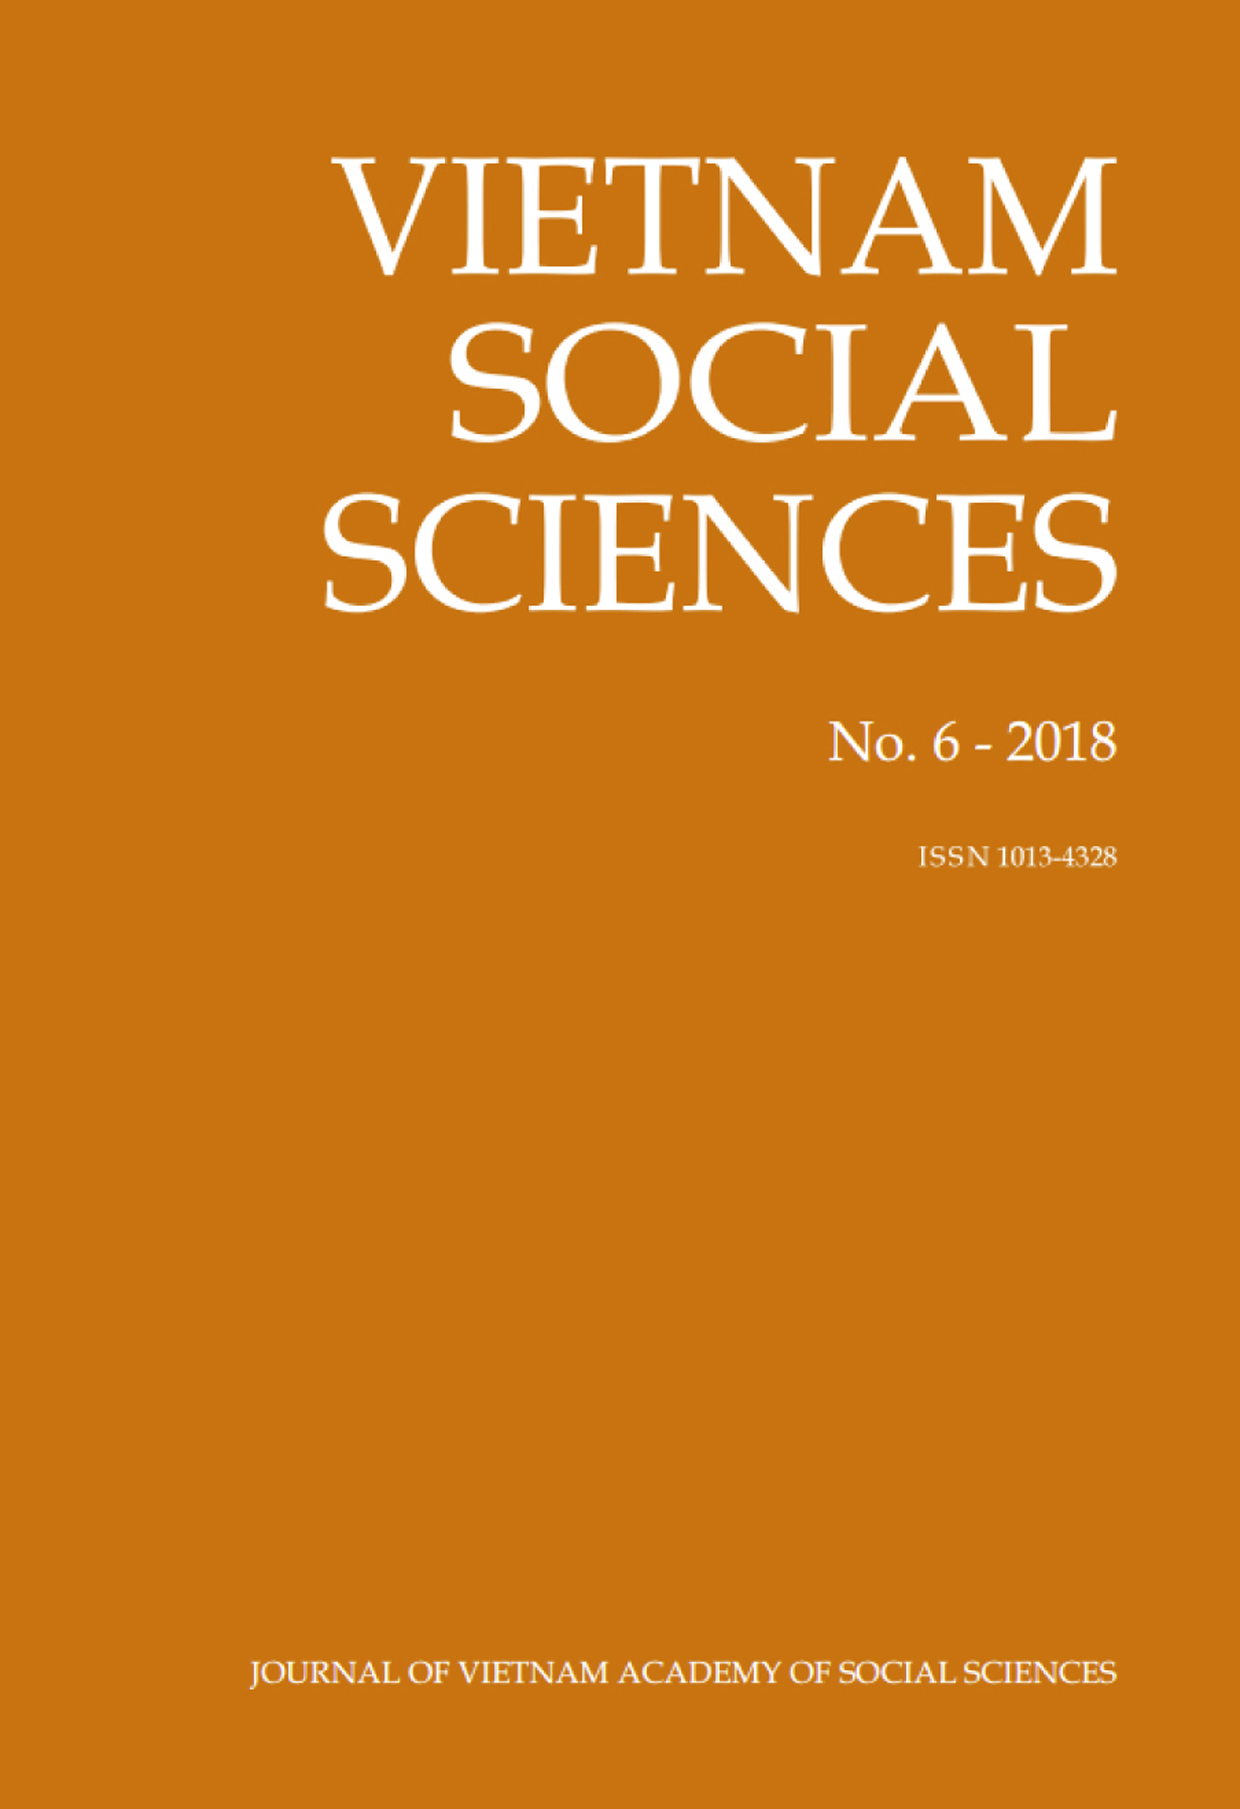 Vietnam Social Sciences. No. 6 - 2018